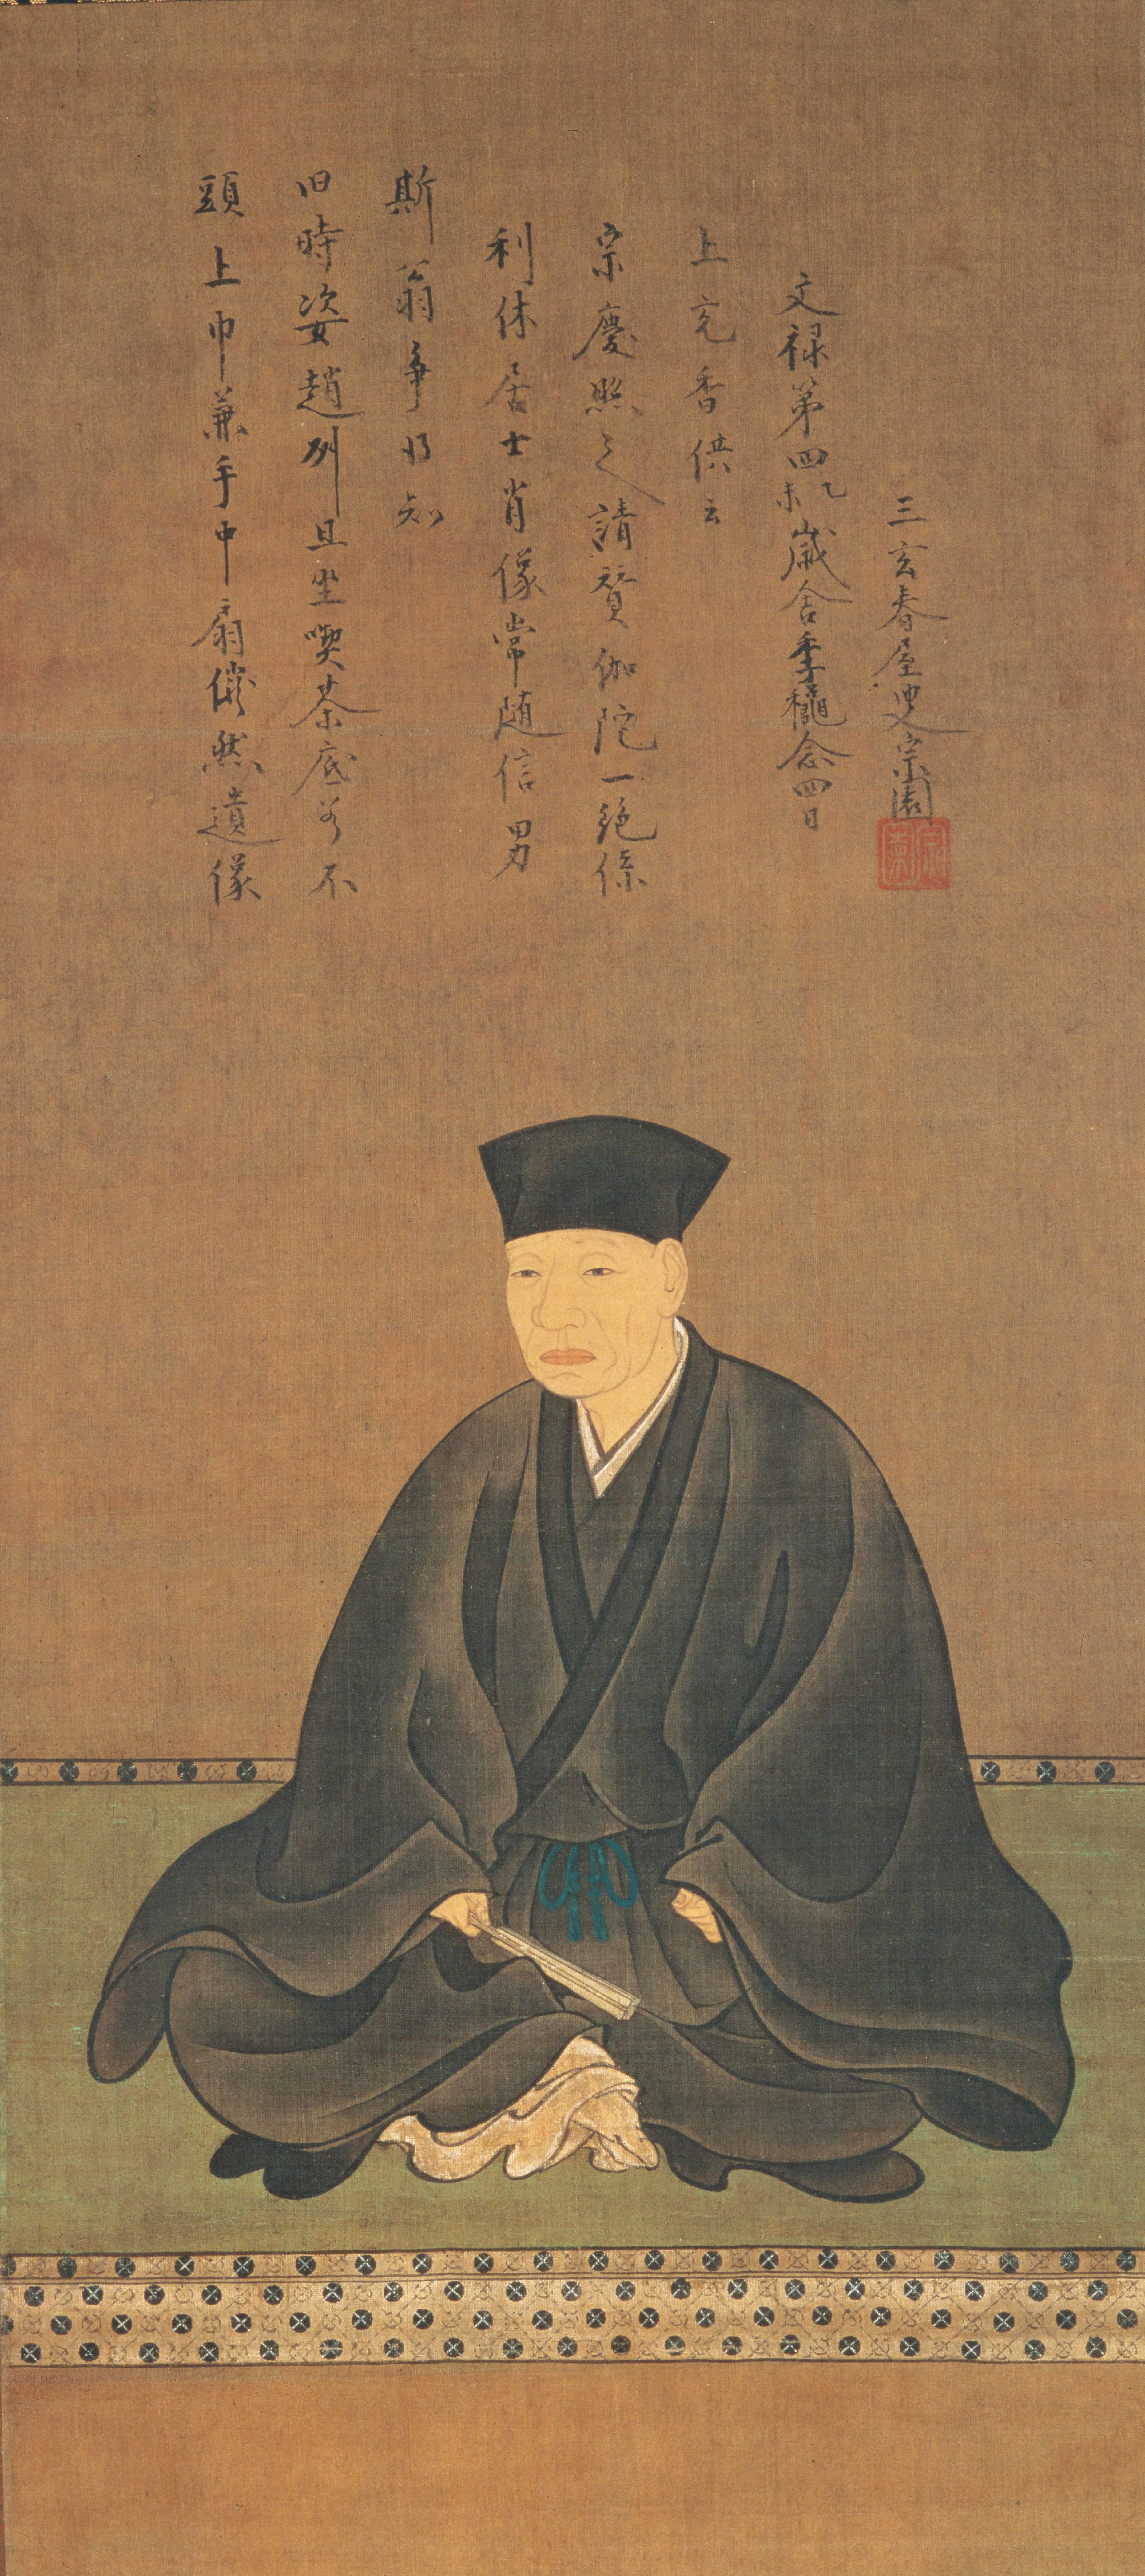 Sen no Rikyū by Hasegawa Tōhaku